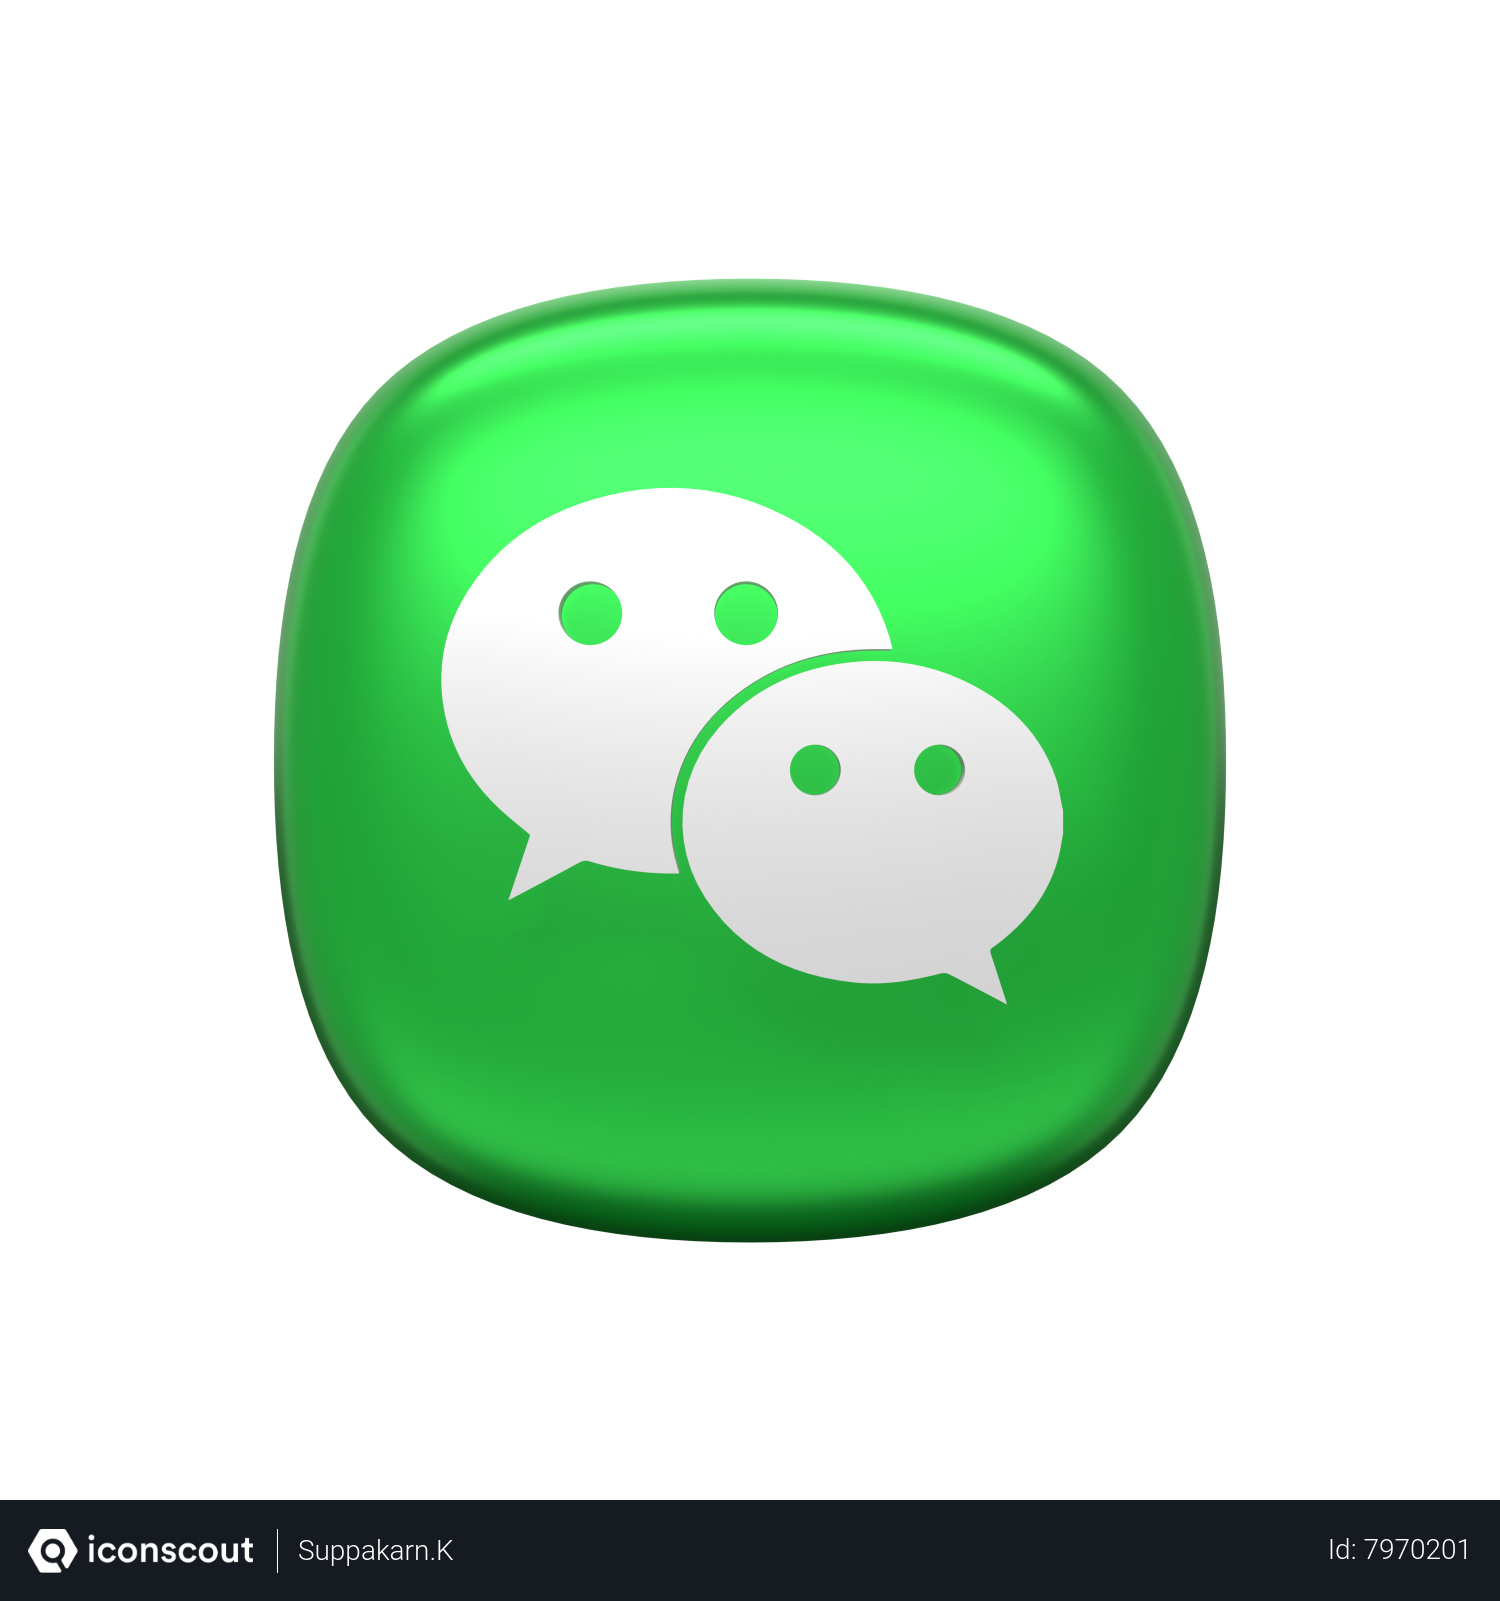 Wechat logo popular social media icon vector PNG - Similar PNG